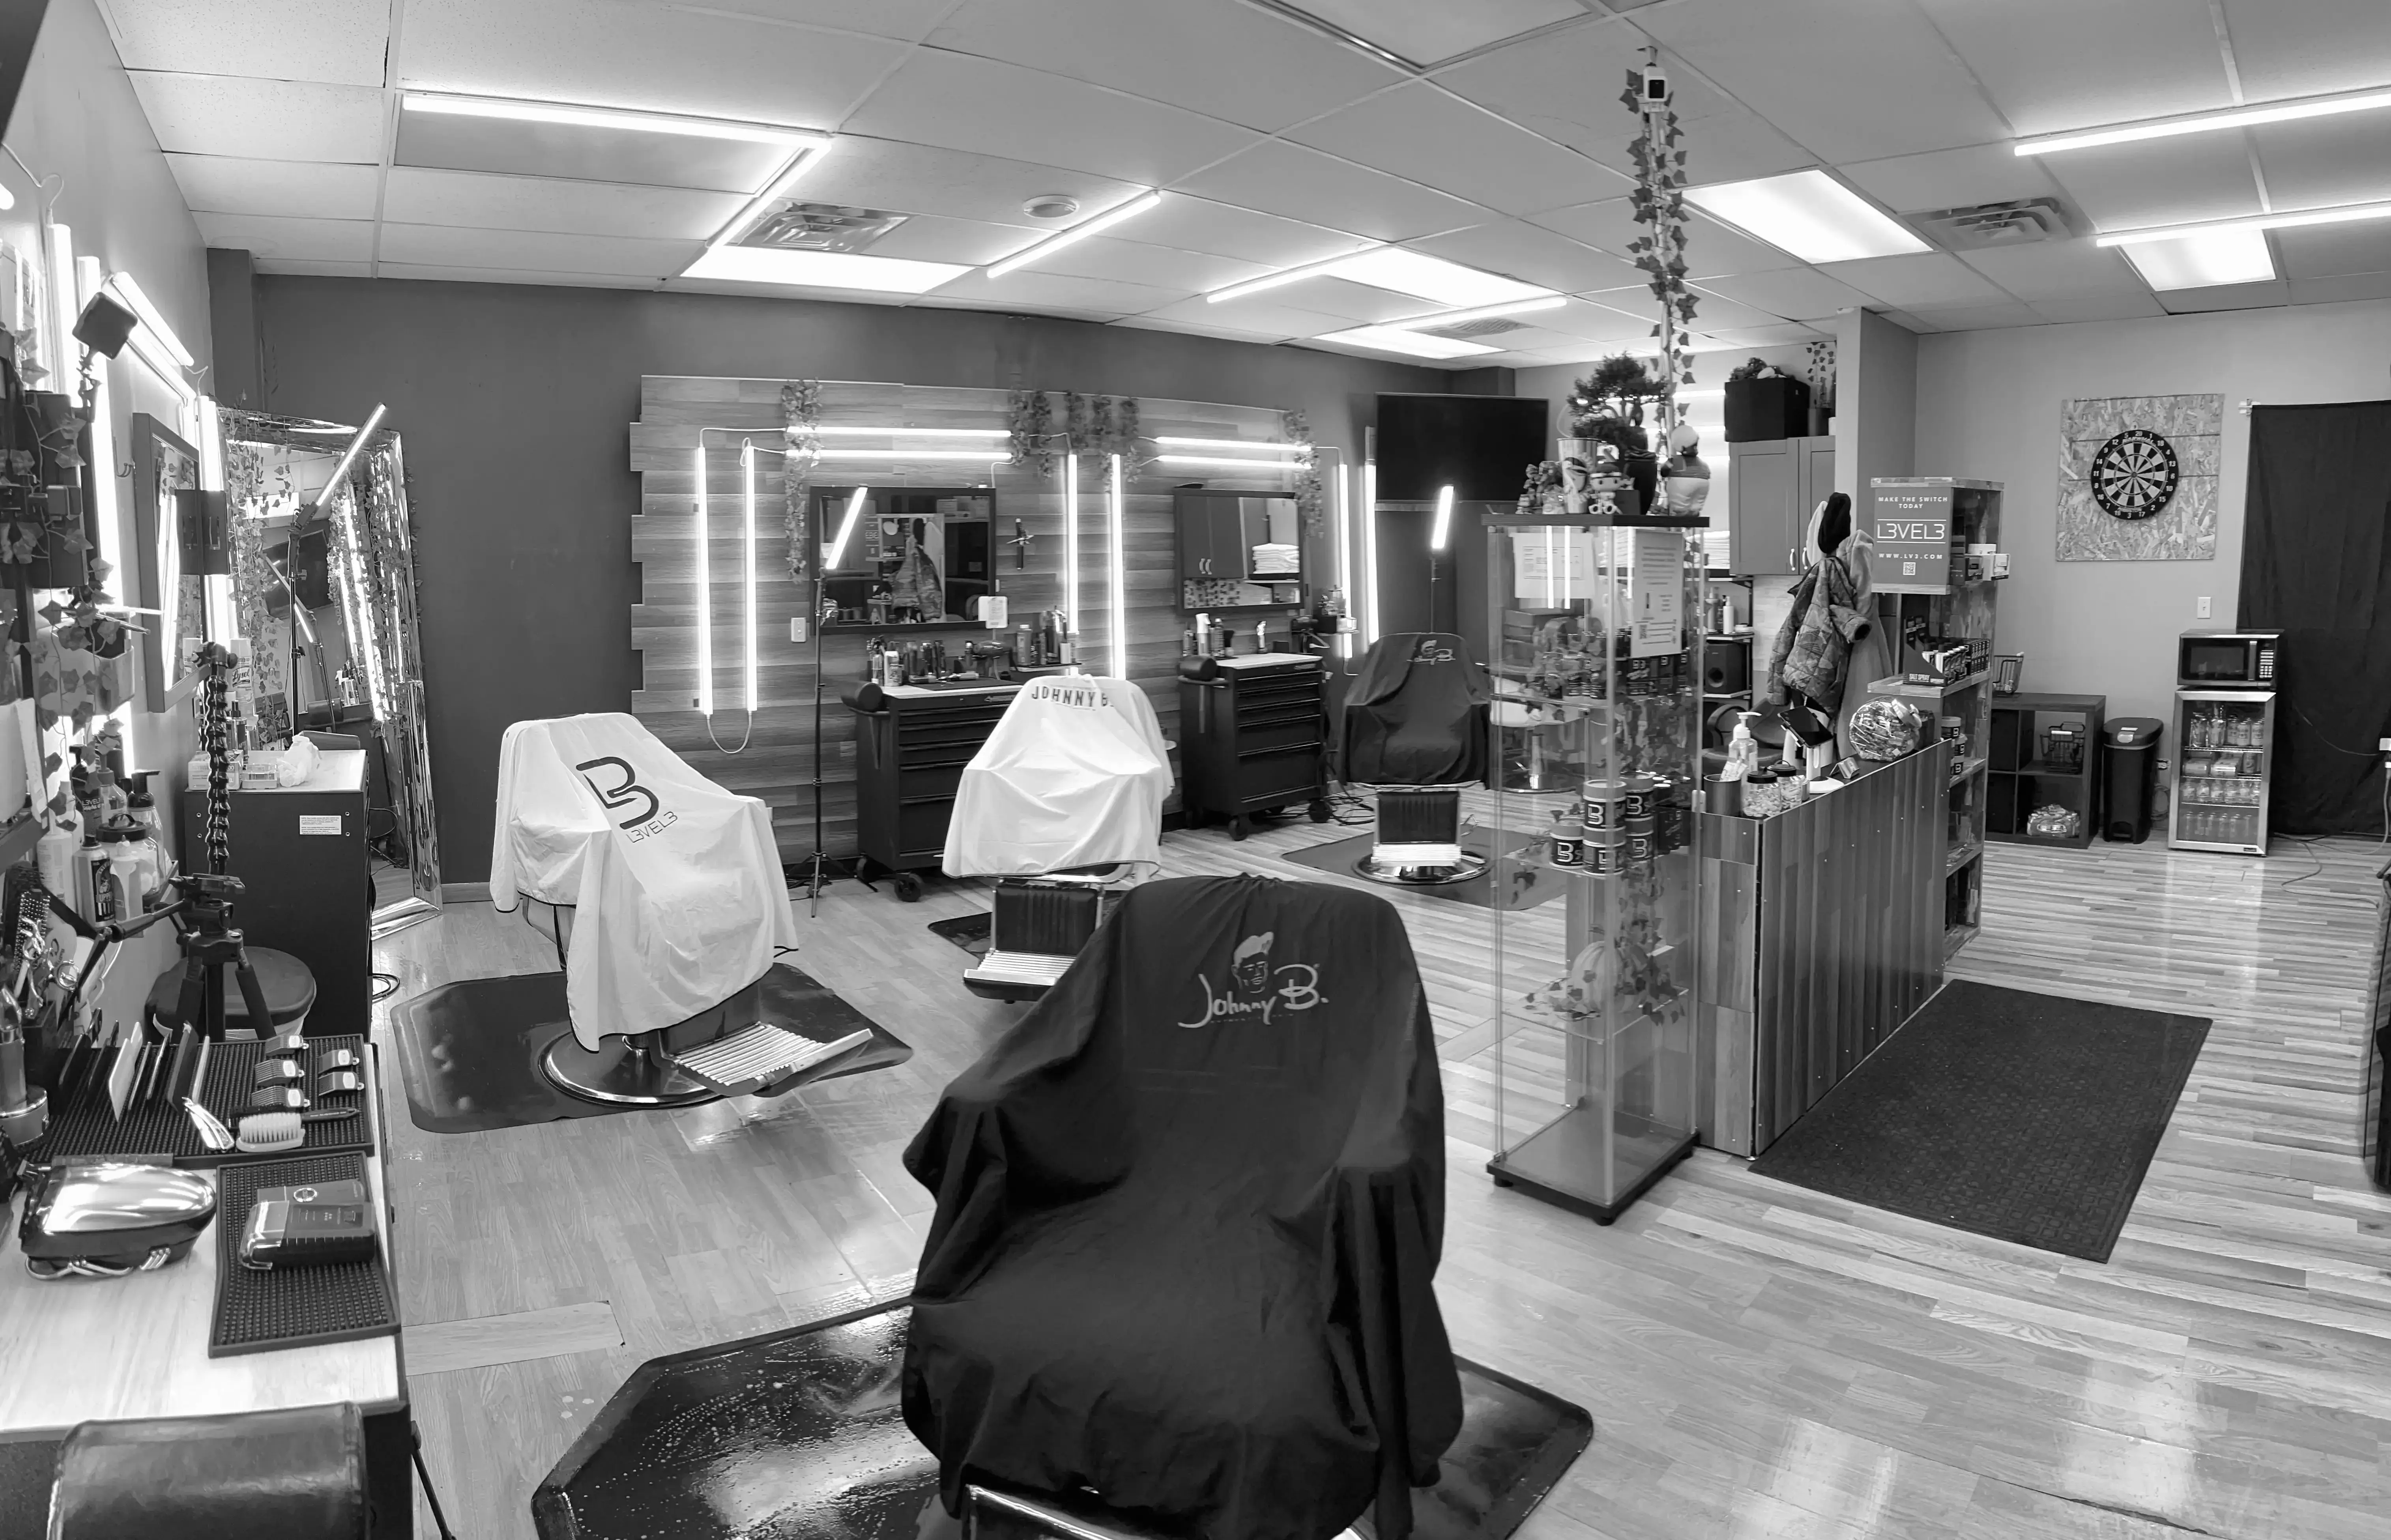 Inside View of JG Barber Studio in Denver